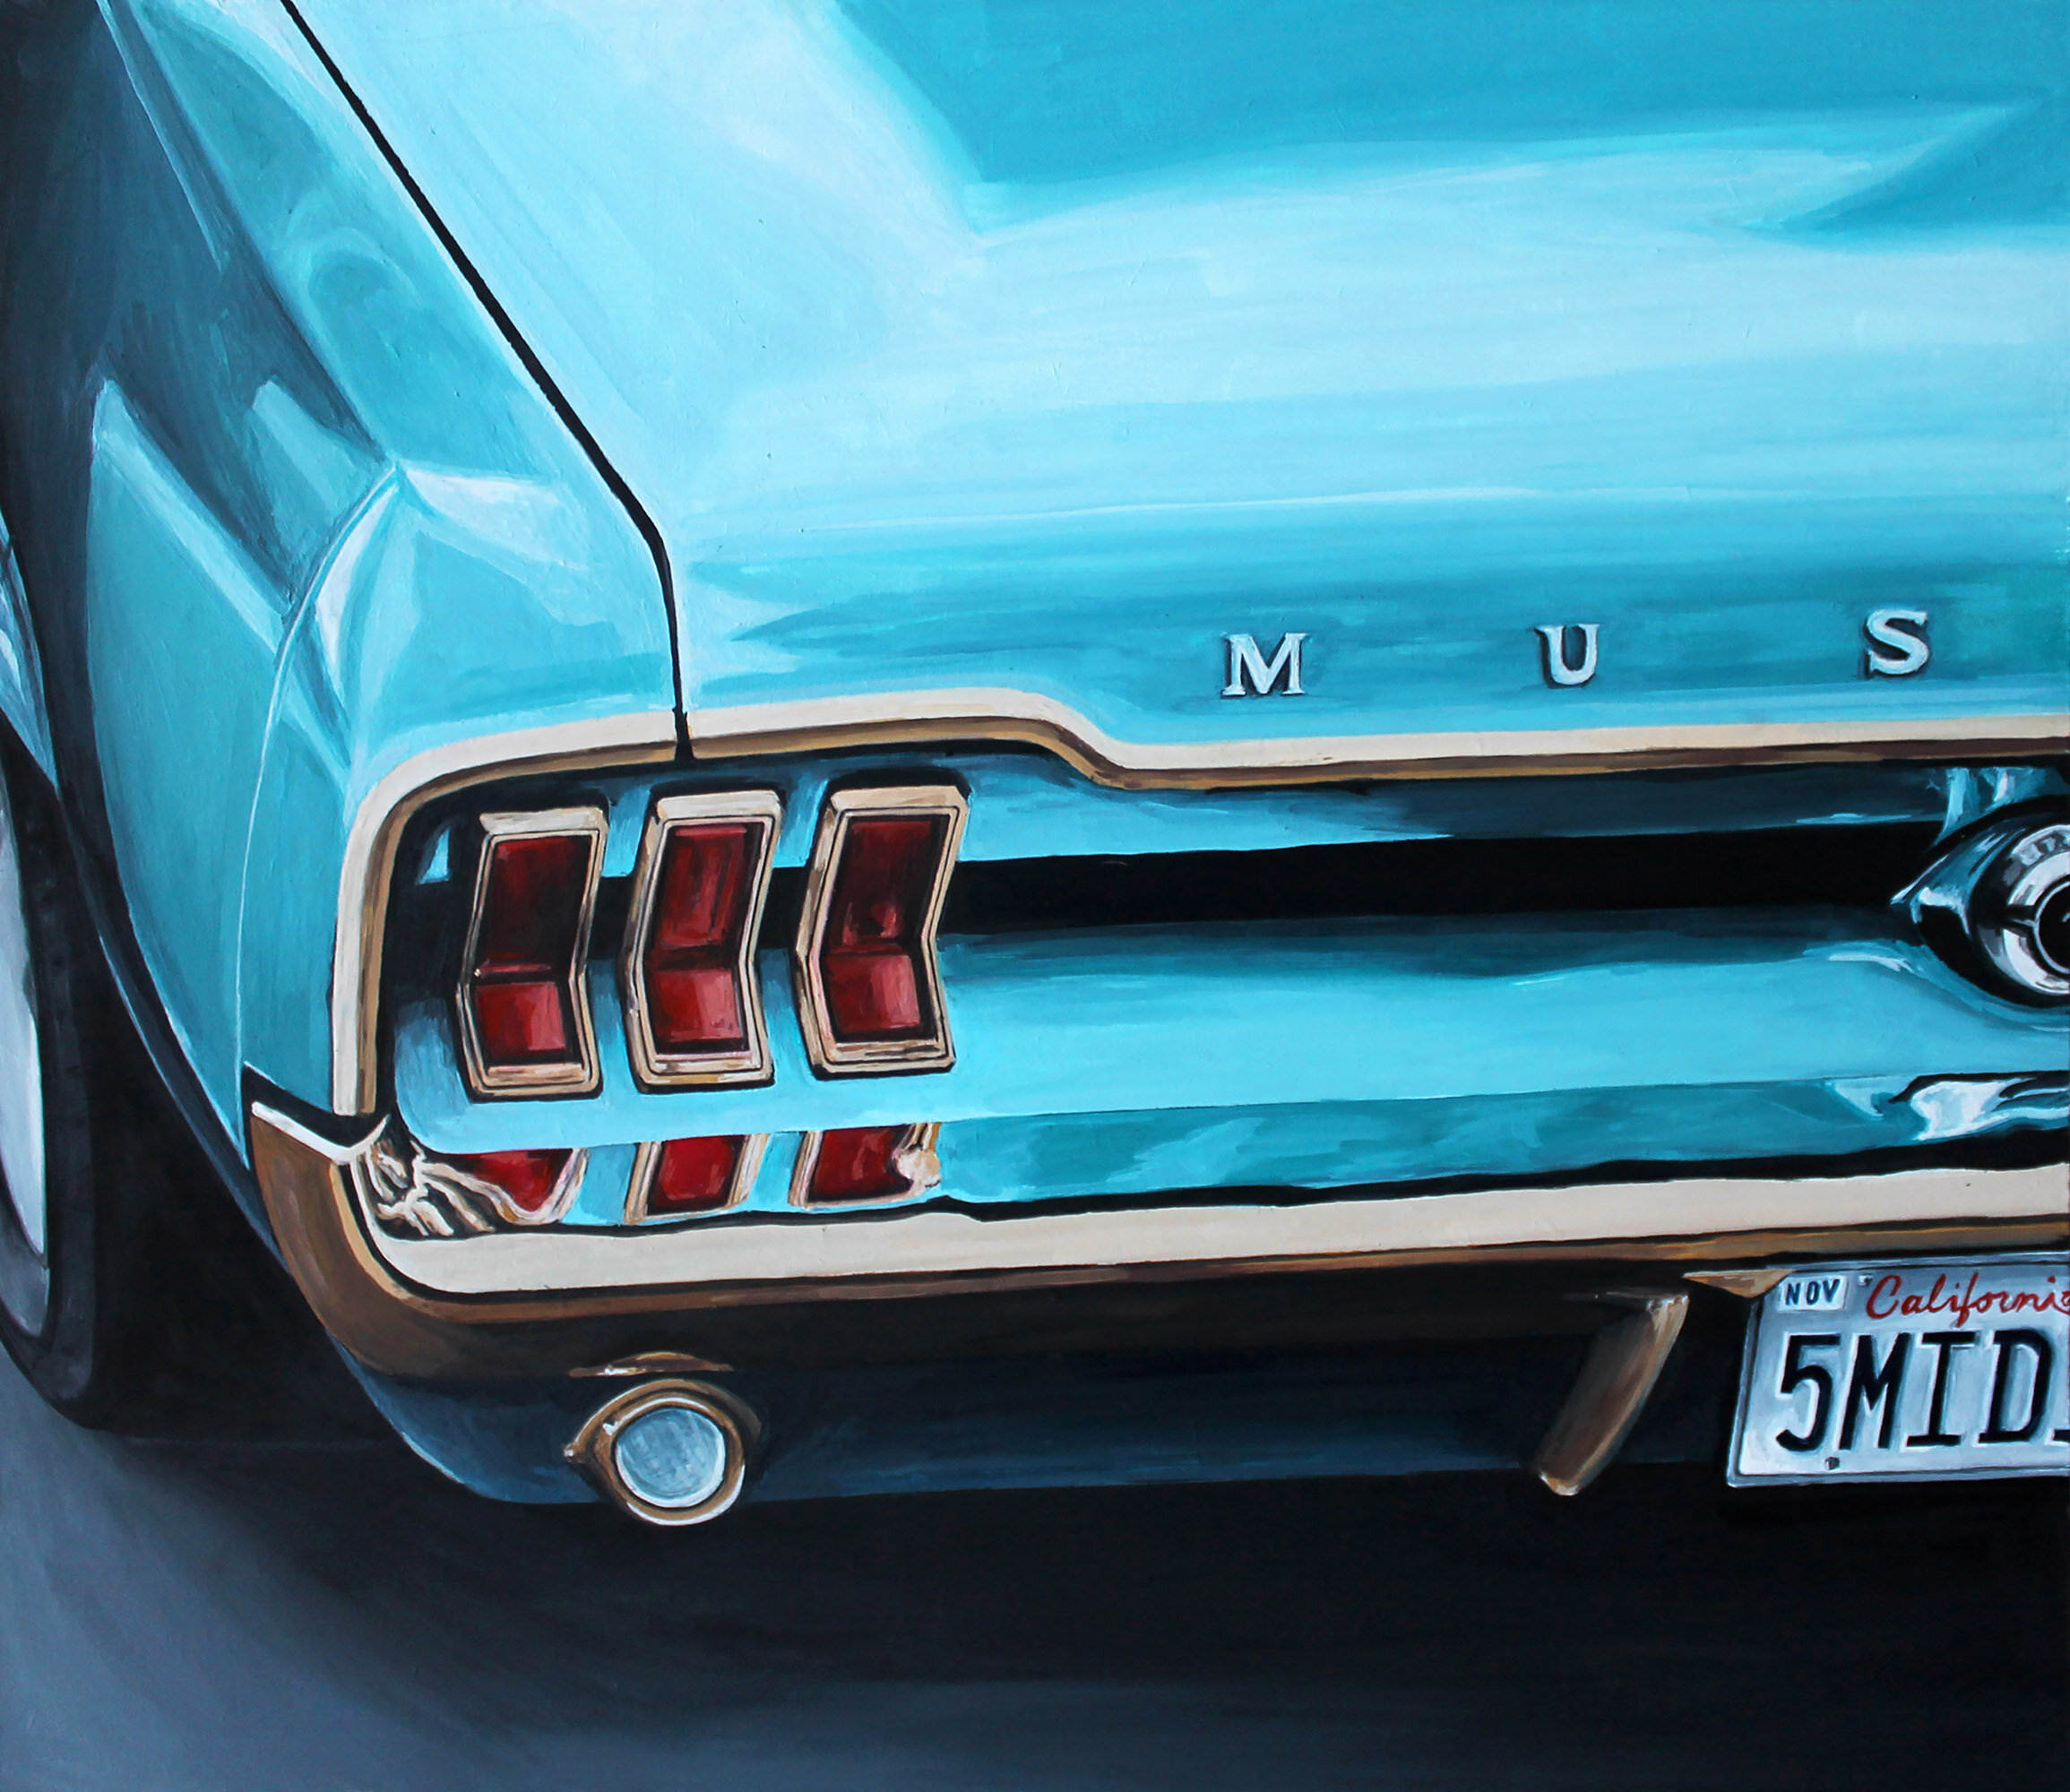 Blue_Ford_Mustang_Painting_ImogenHawgood.jpg